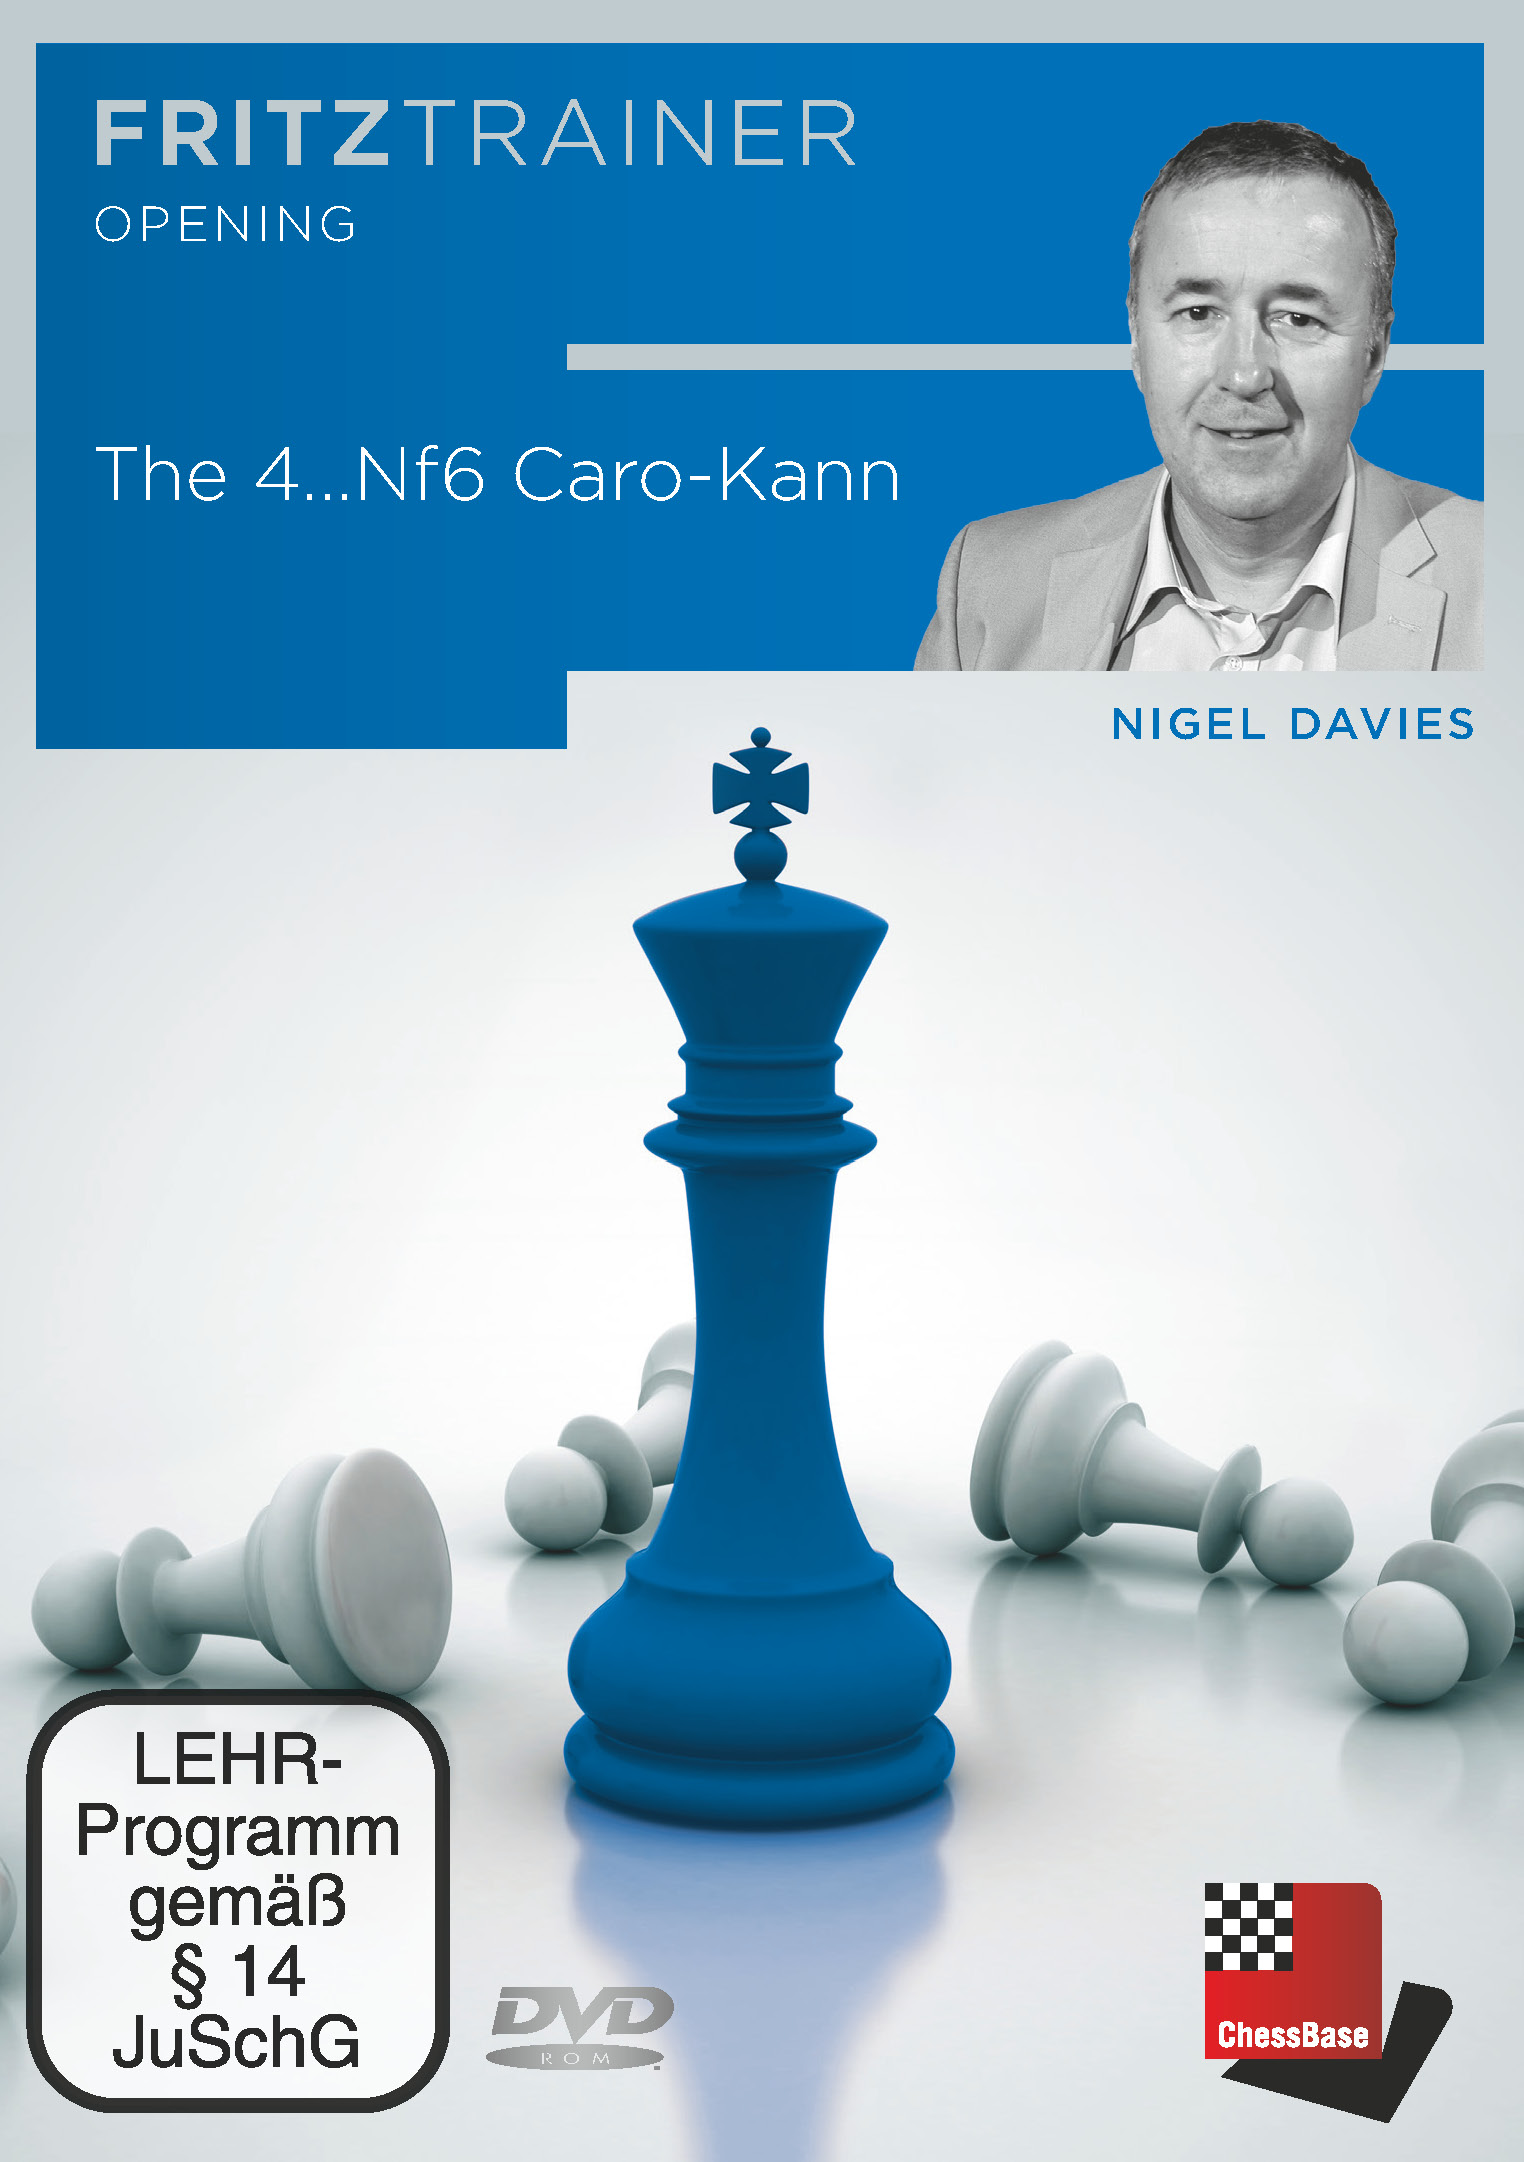 The 4...Nf6 Caro-Kann